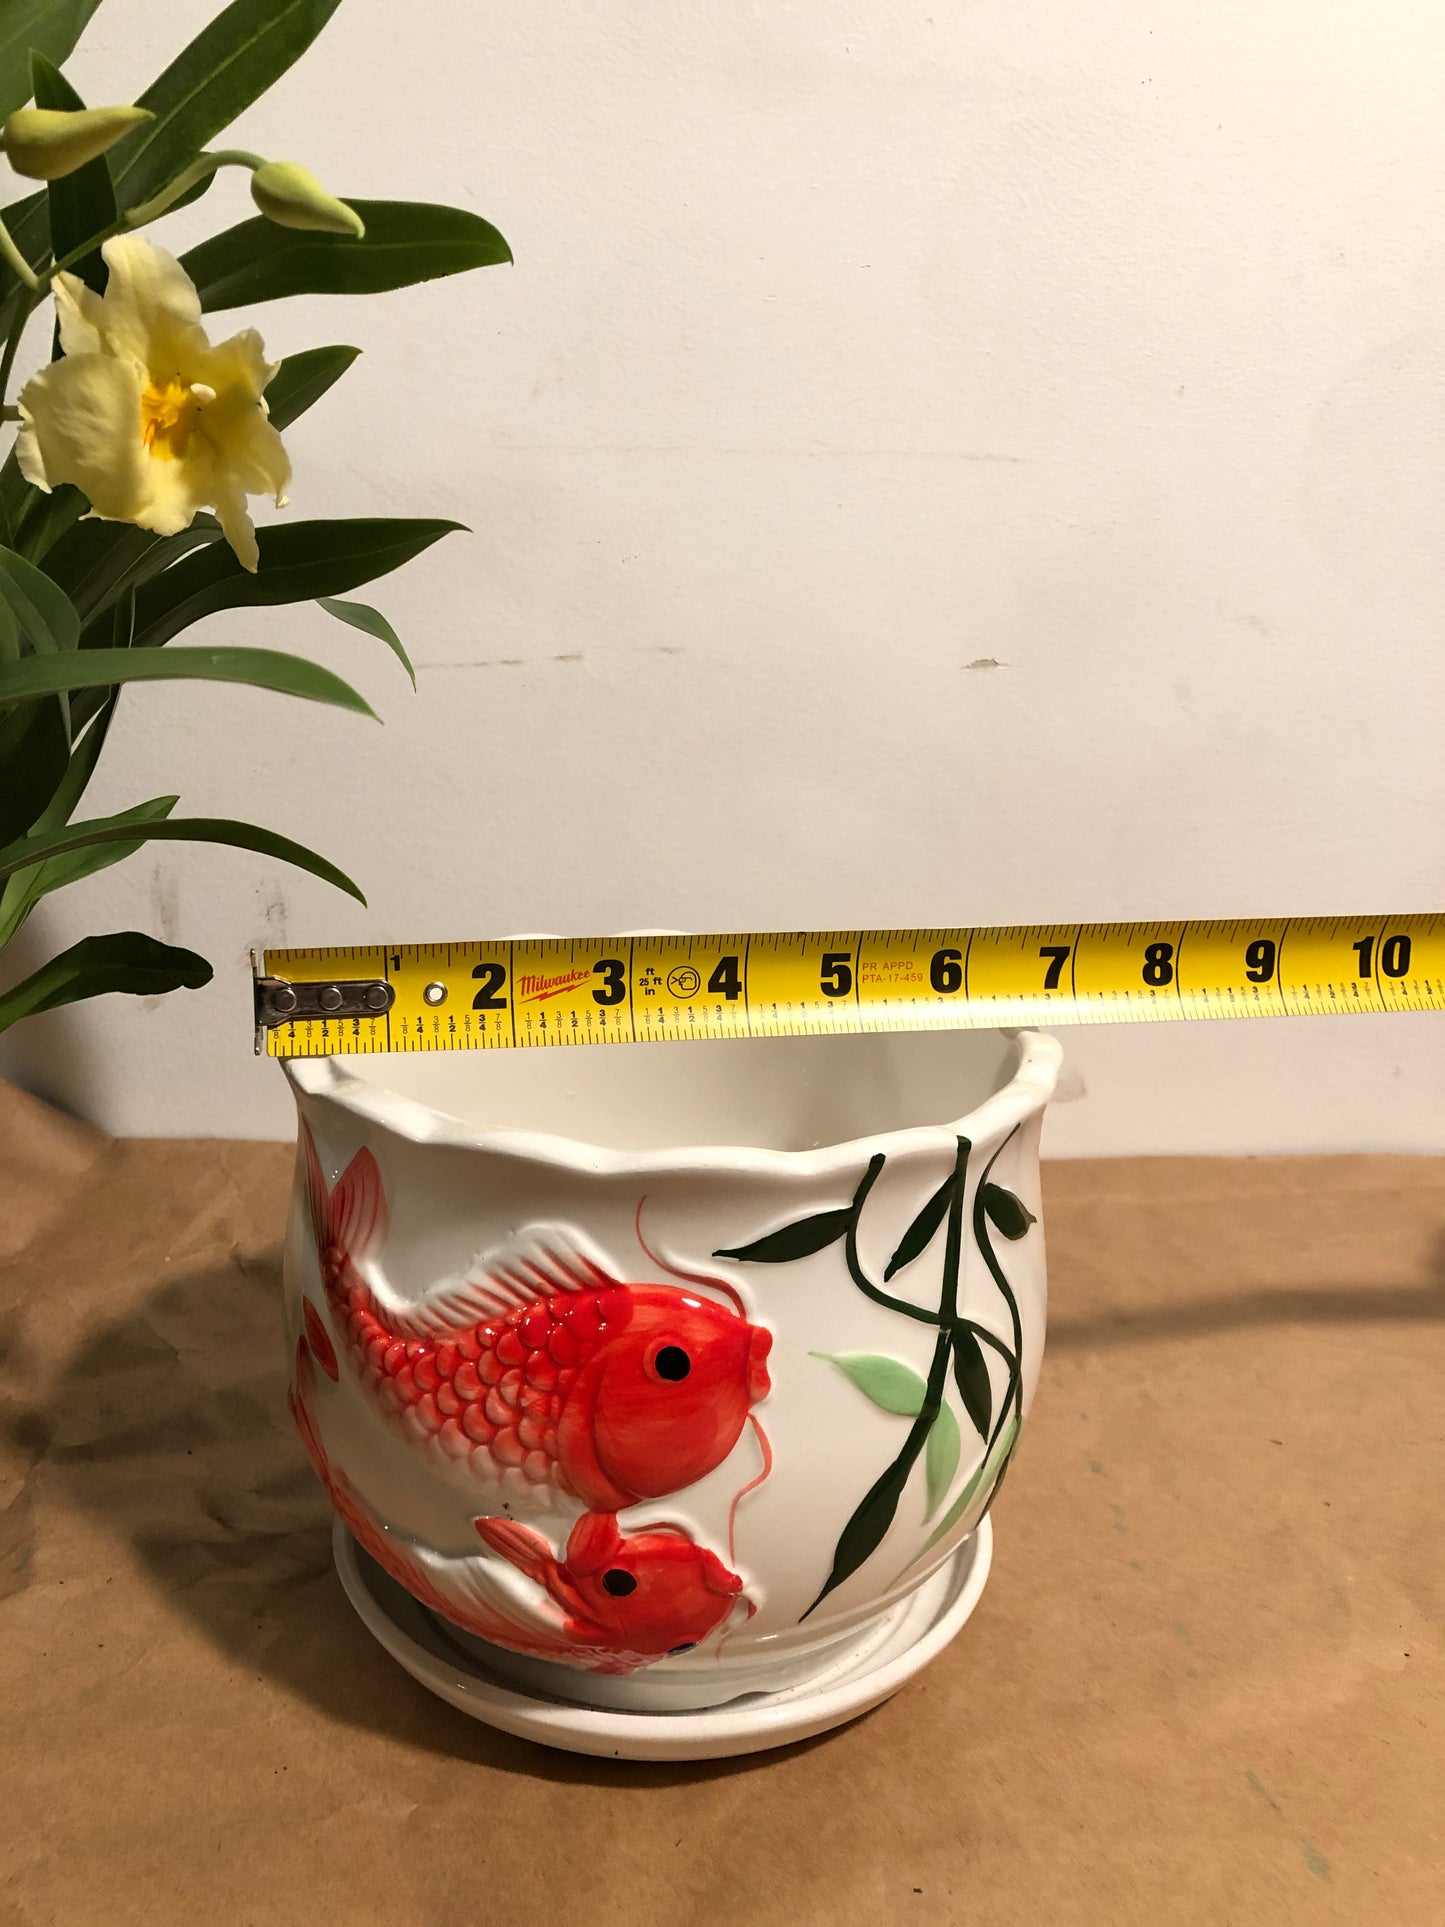 6.5" Red Fish Pots